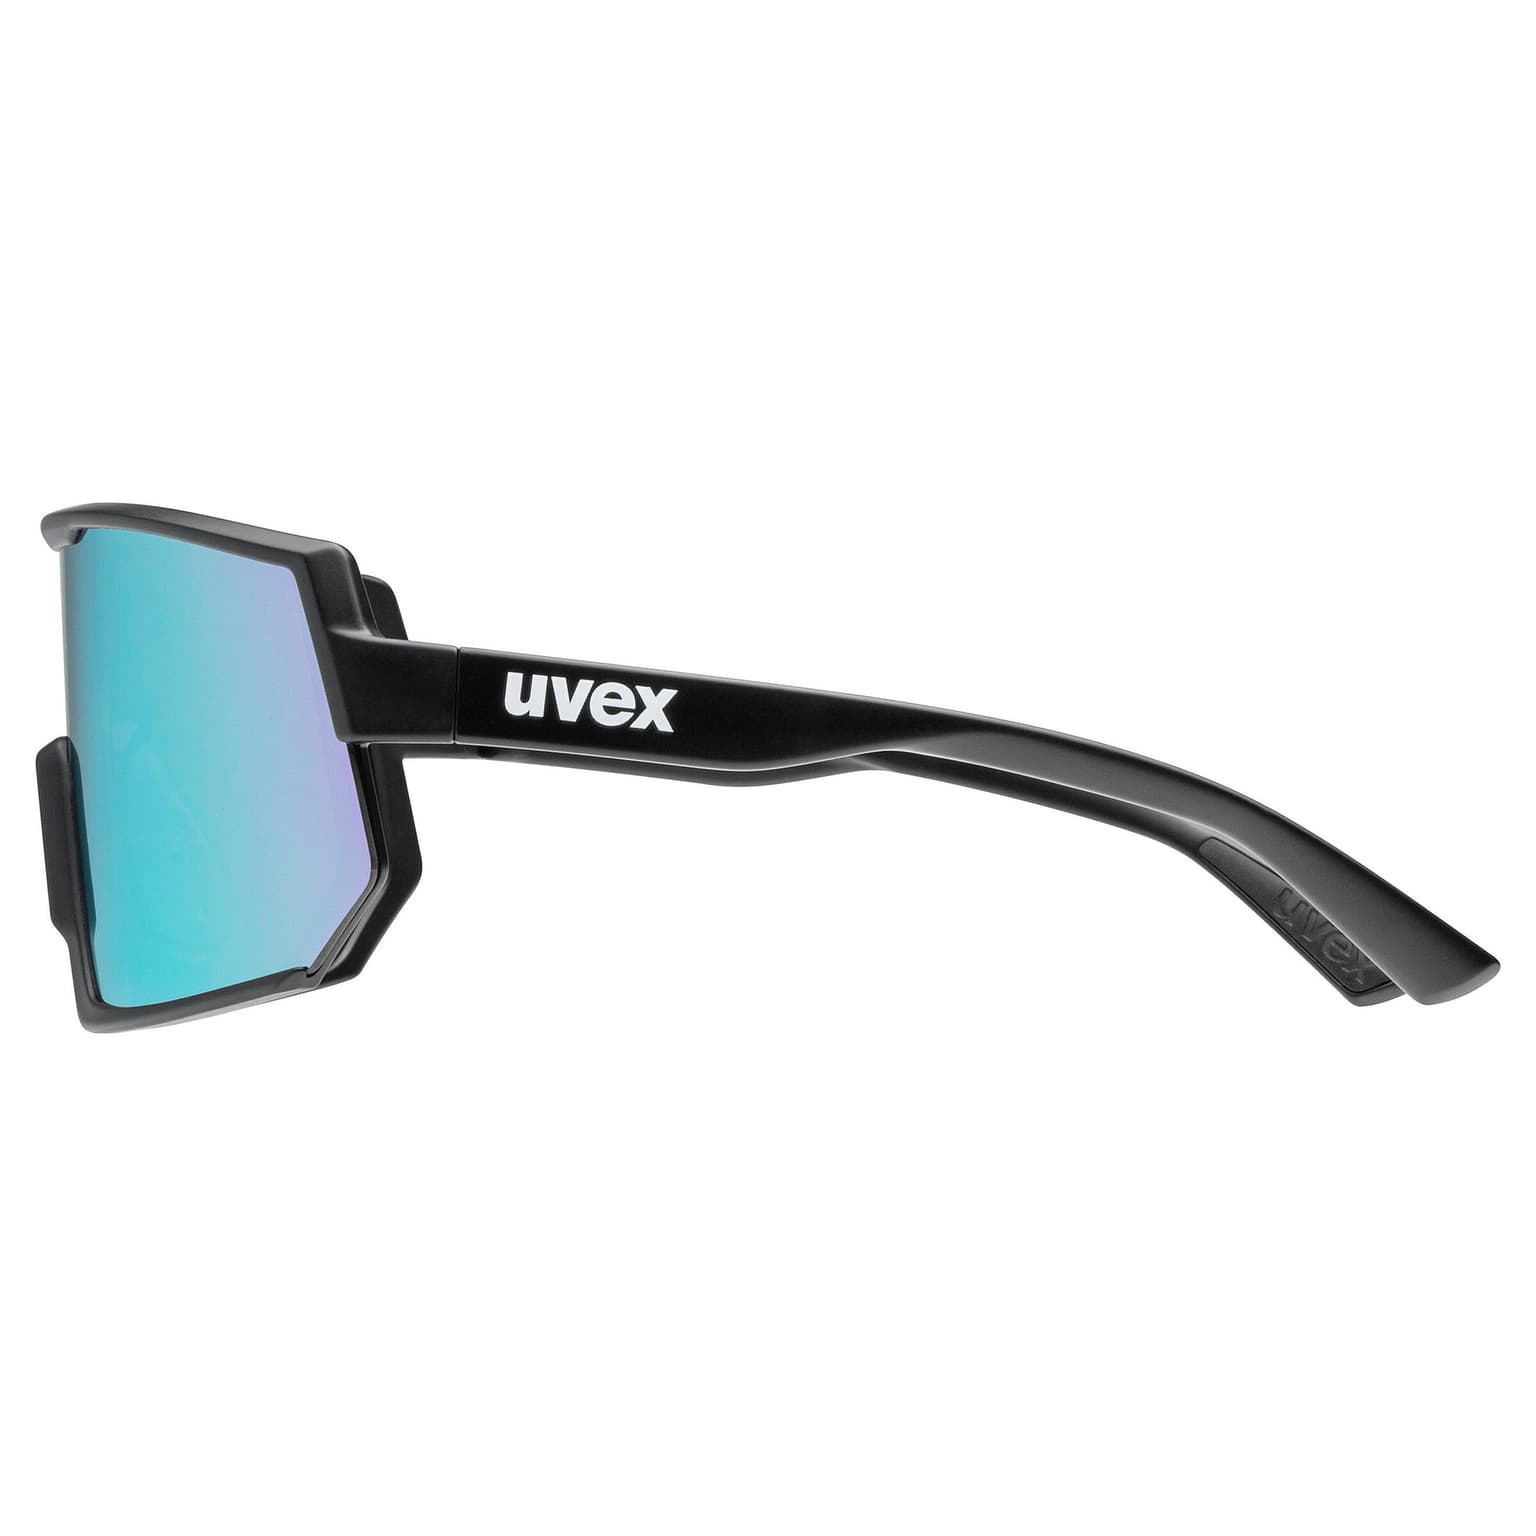 Uvex Uvex Allround Sportbrille kohle 2